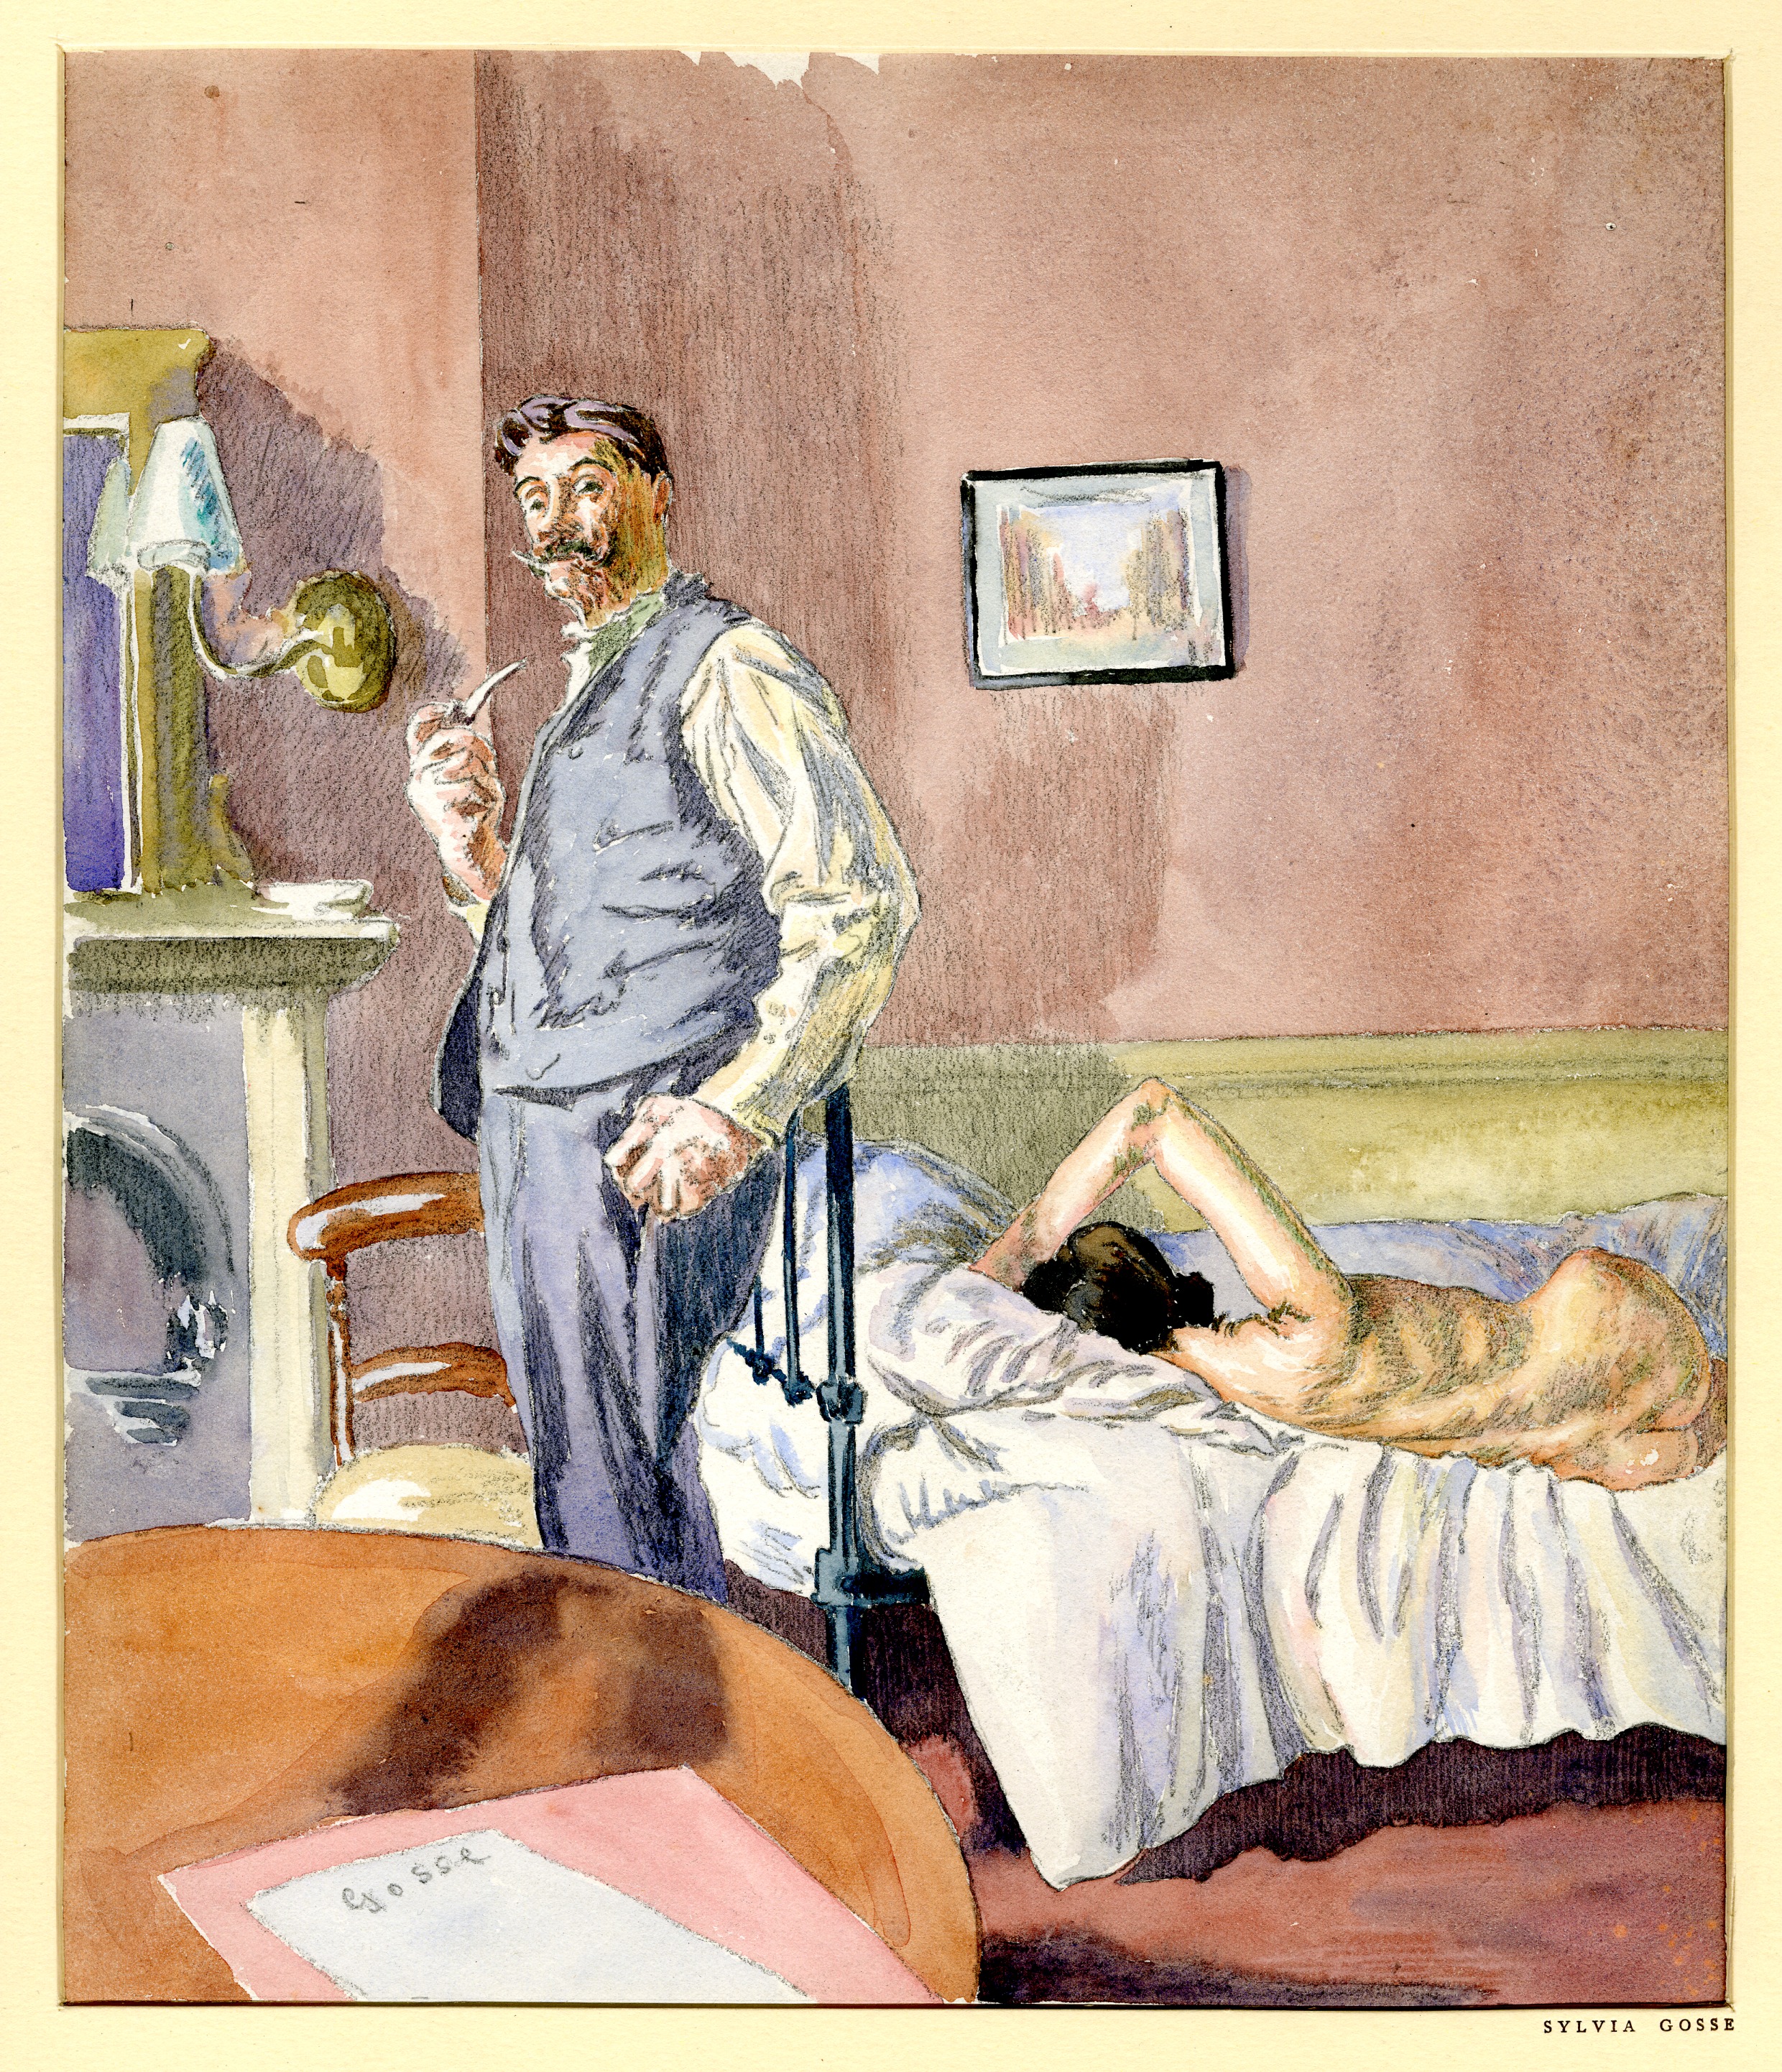 Interior with figures (circa 1925)